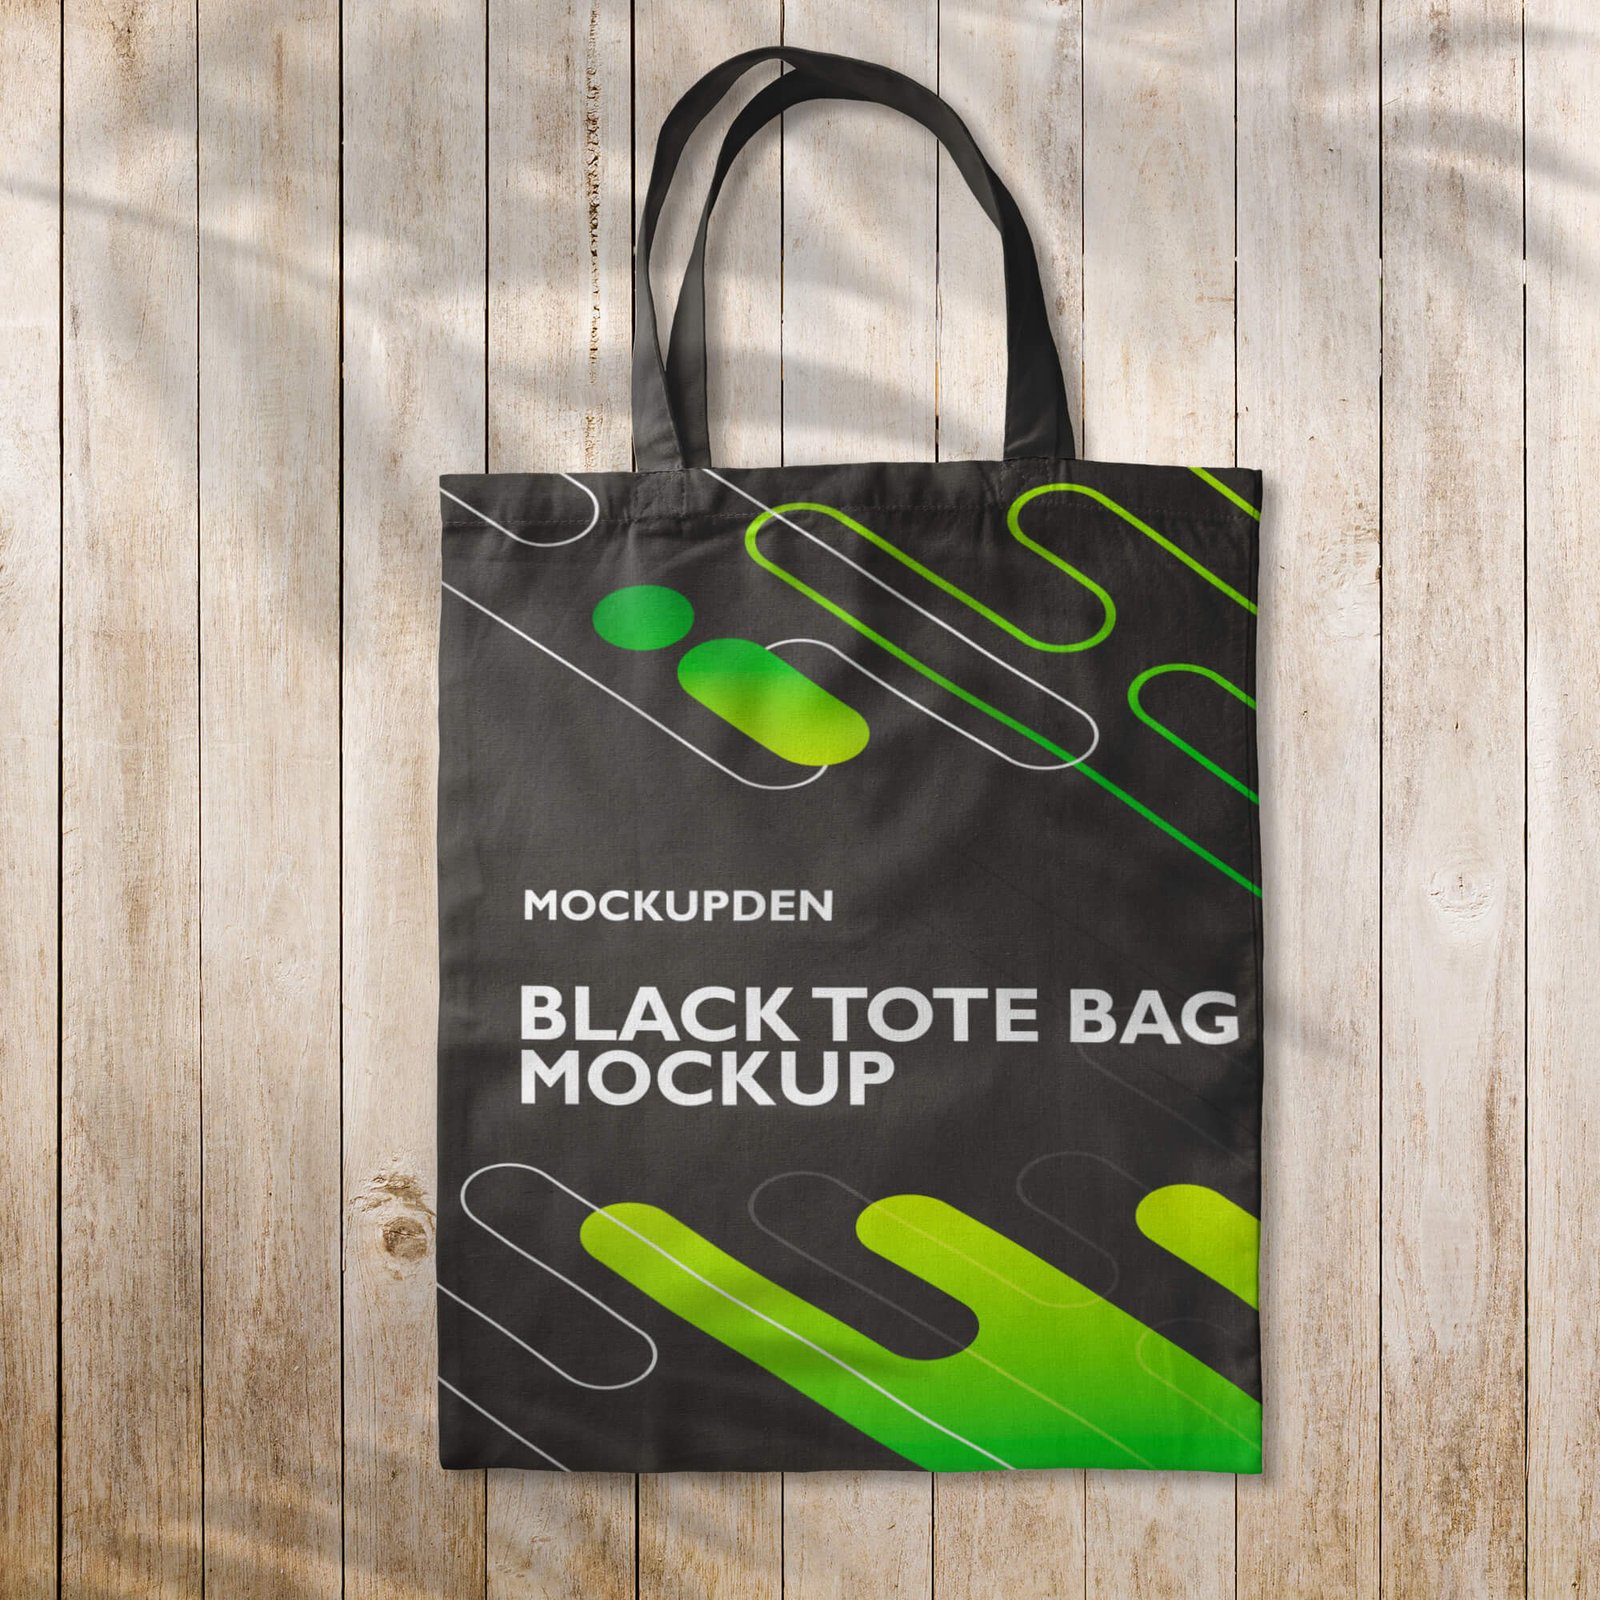 Free Black Tote Bag Mockup PSD Template